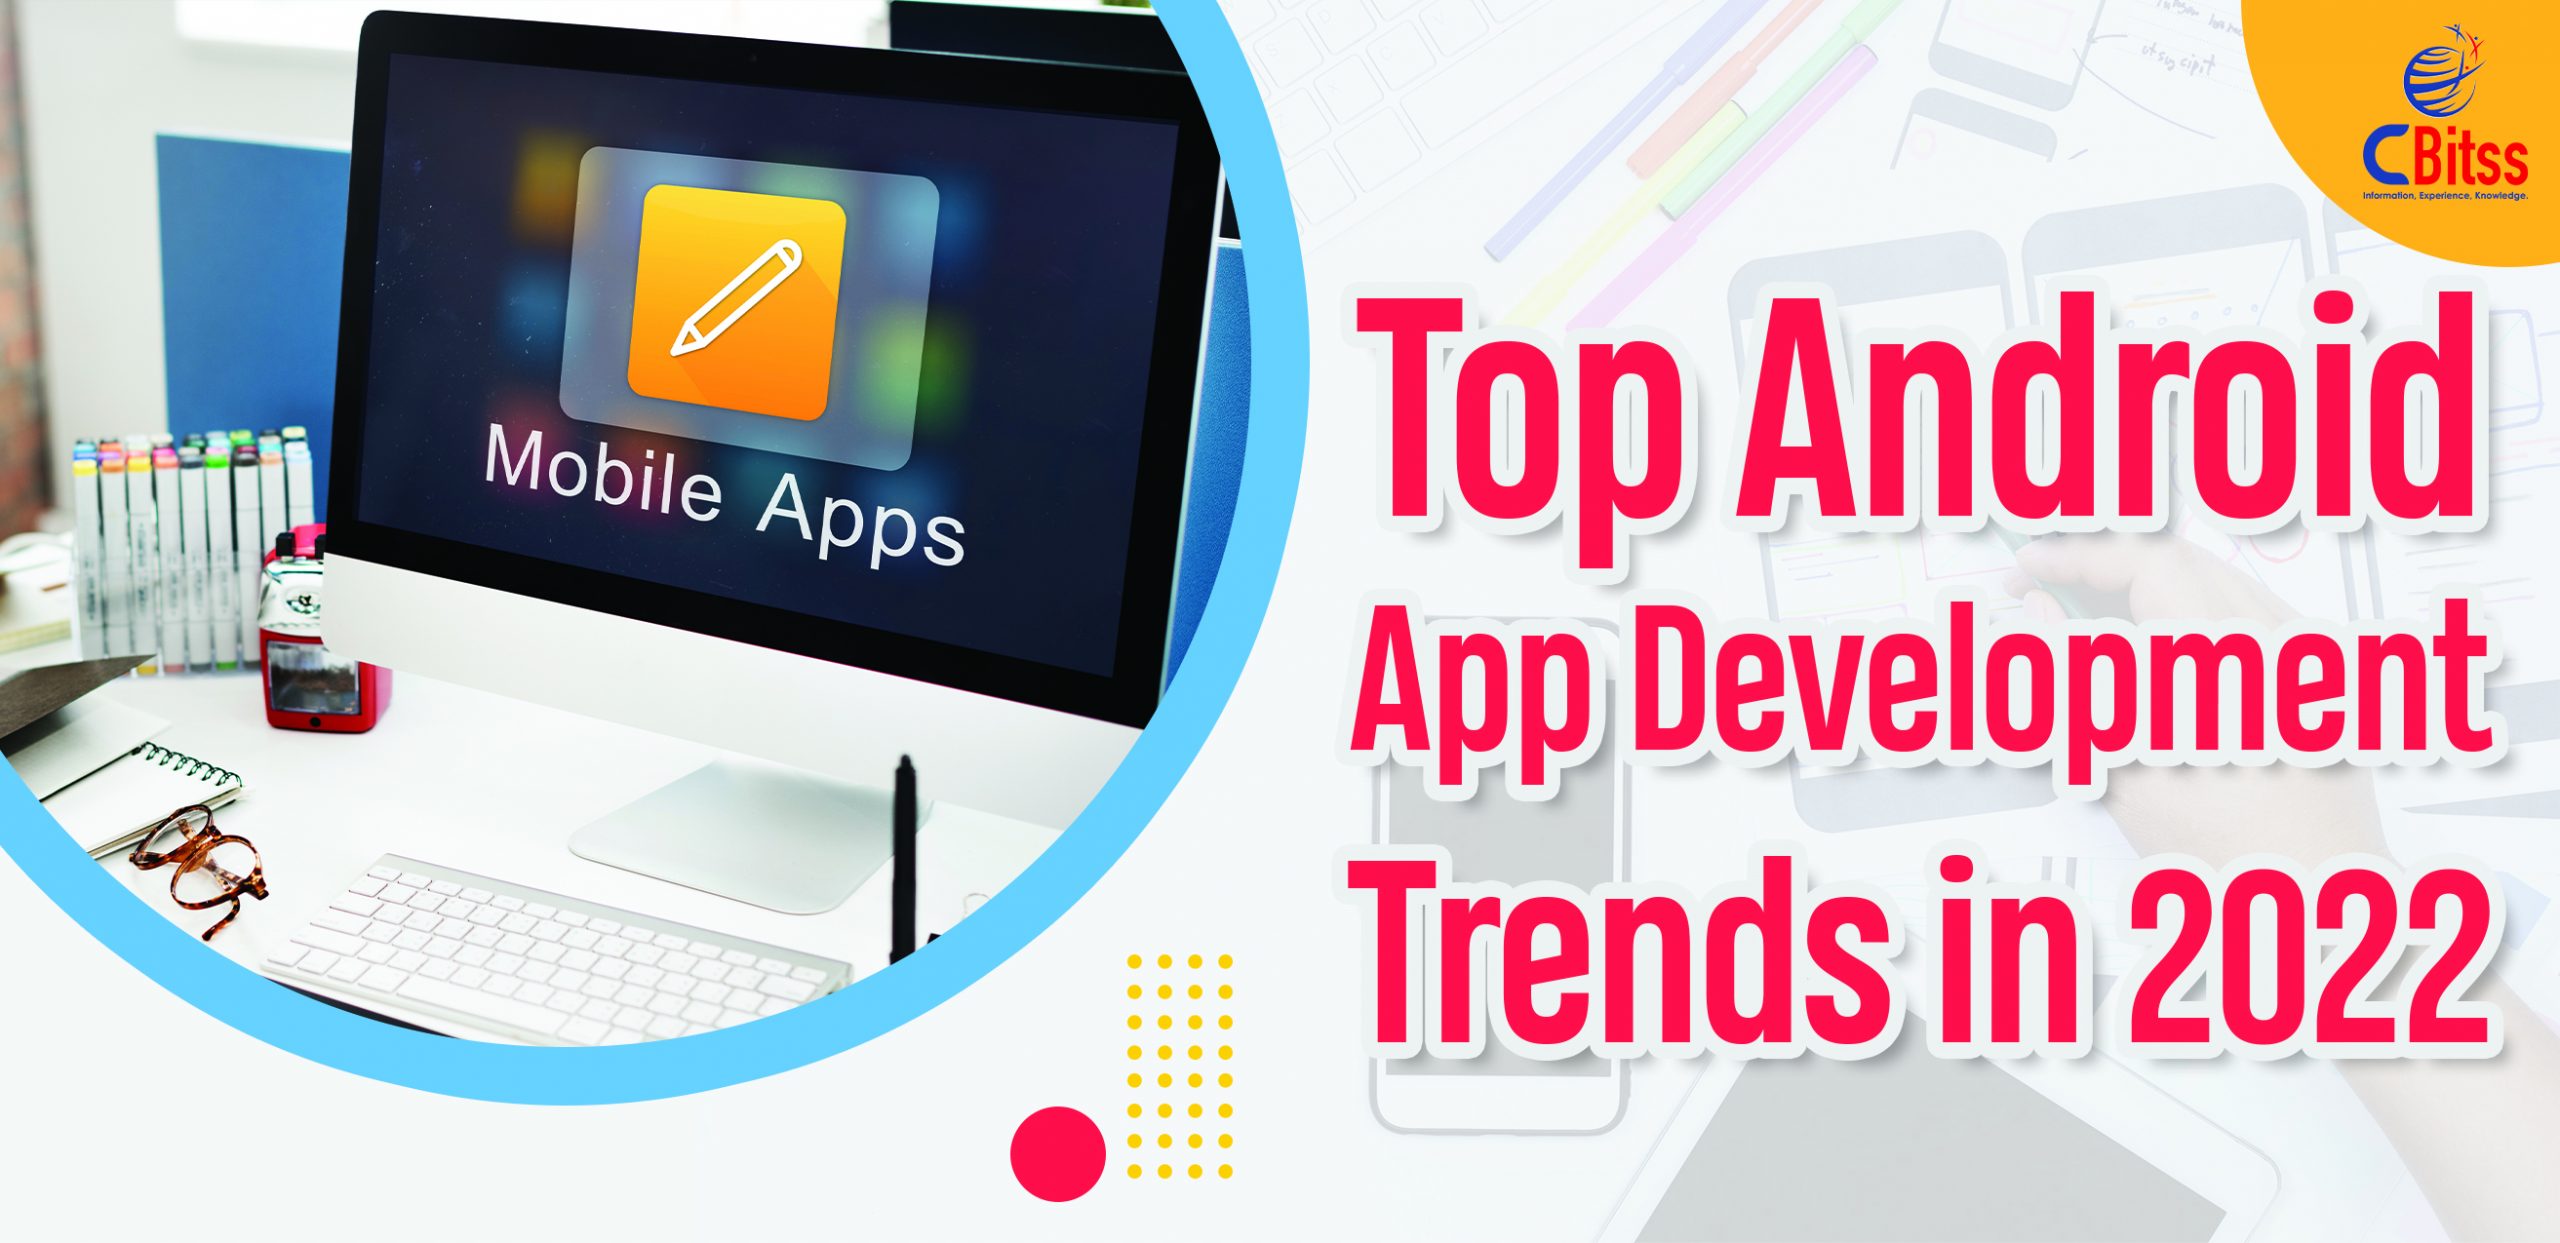 Top Android app development trends in 2022